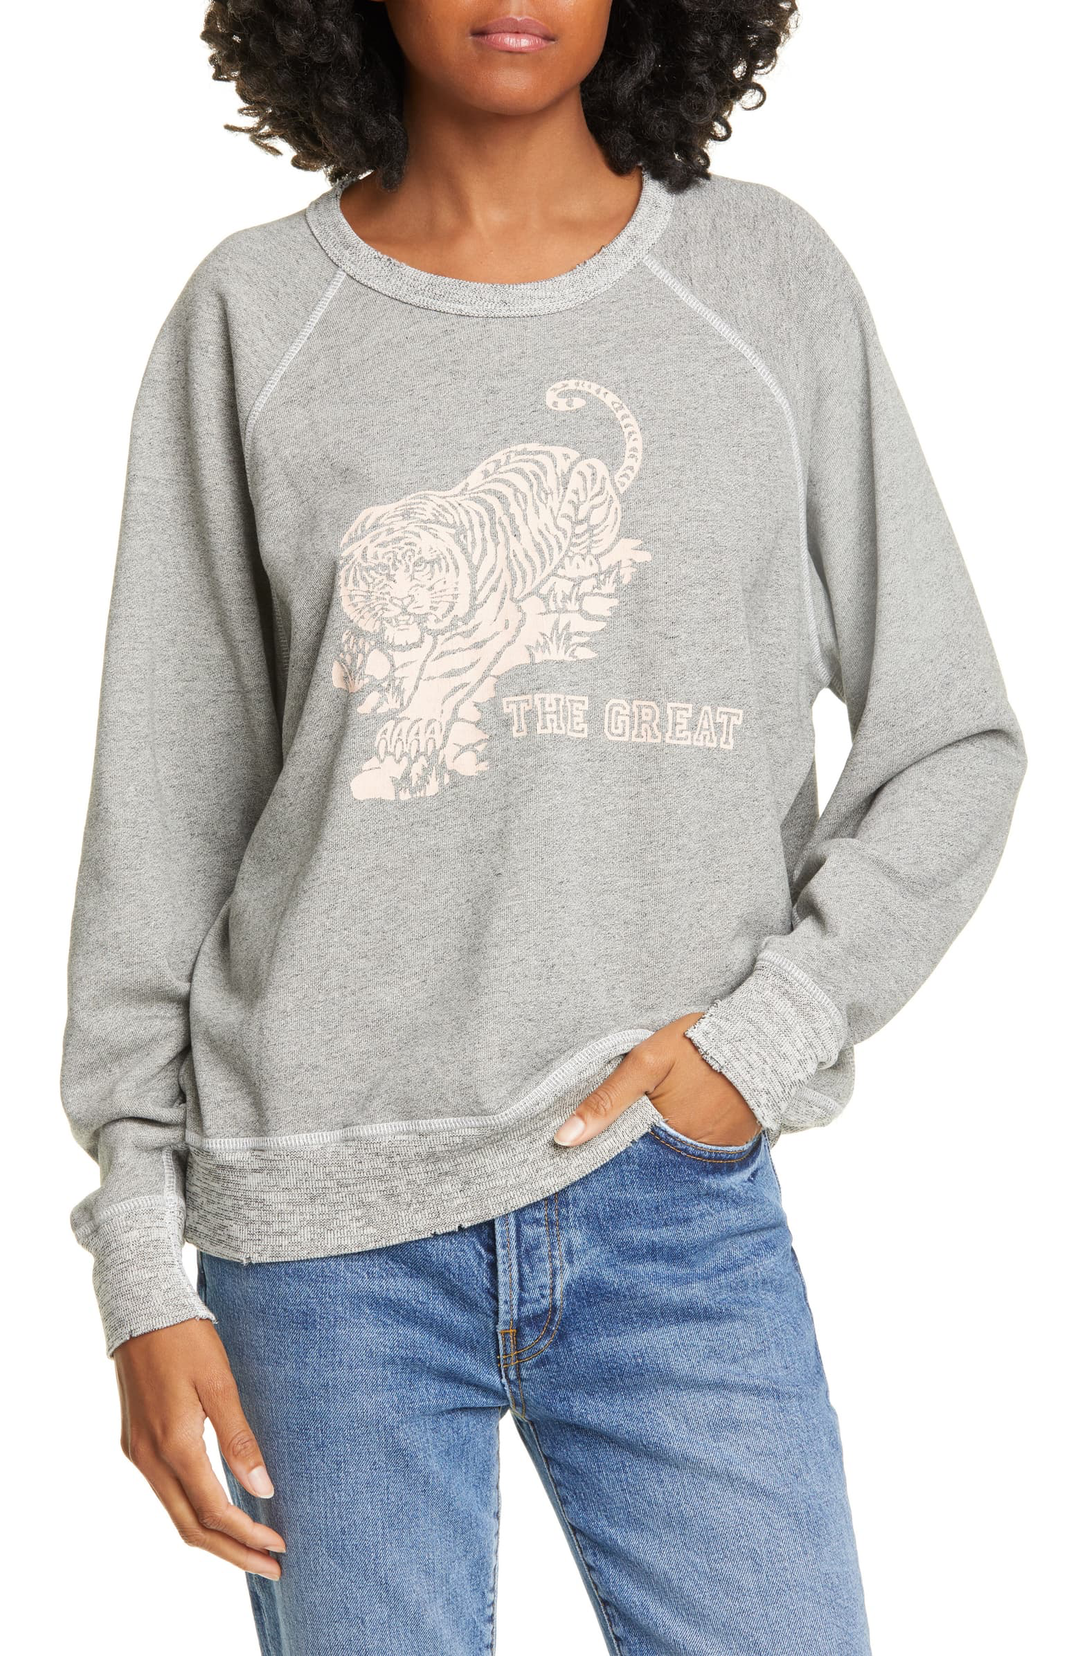 Tiger College Sweatshirt - Kingfisher Road - Online Boutique